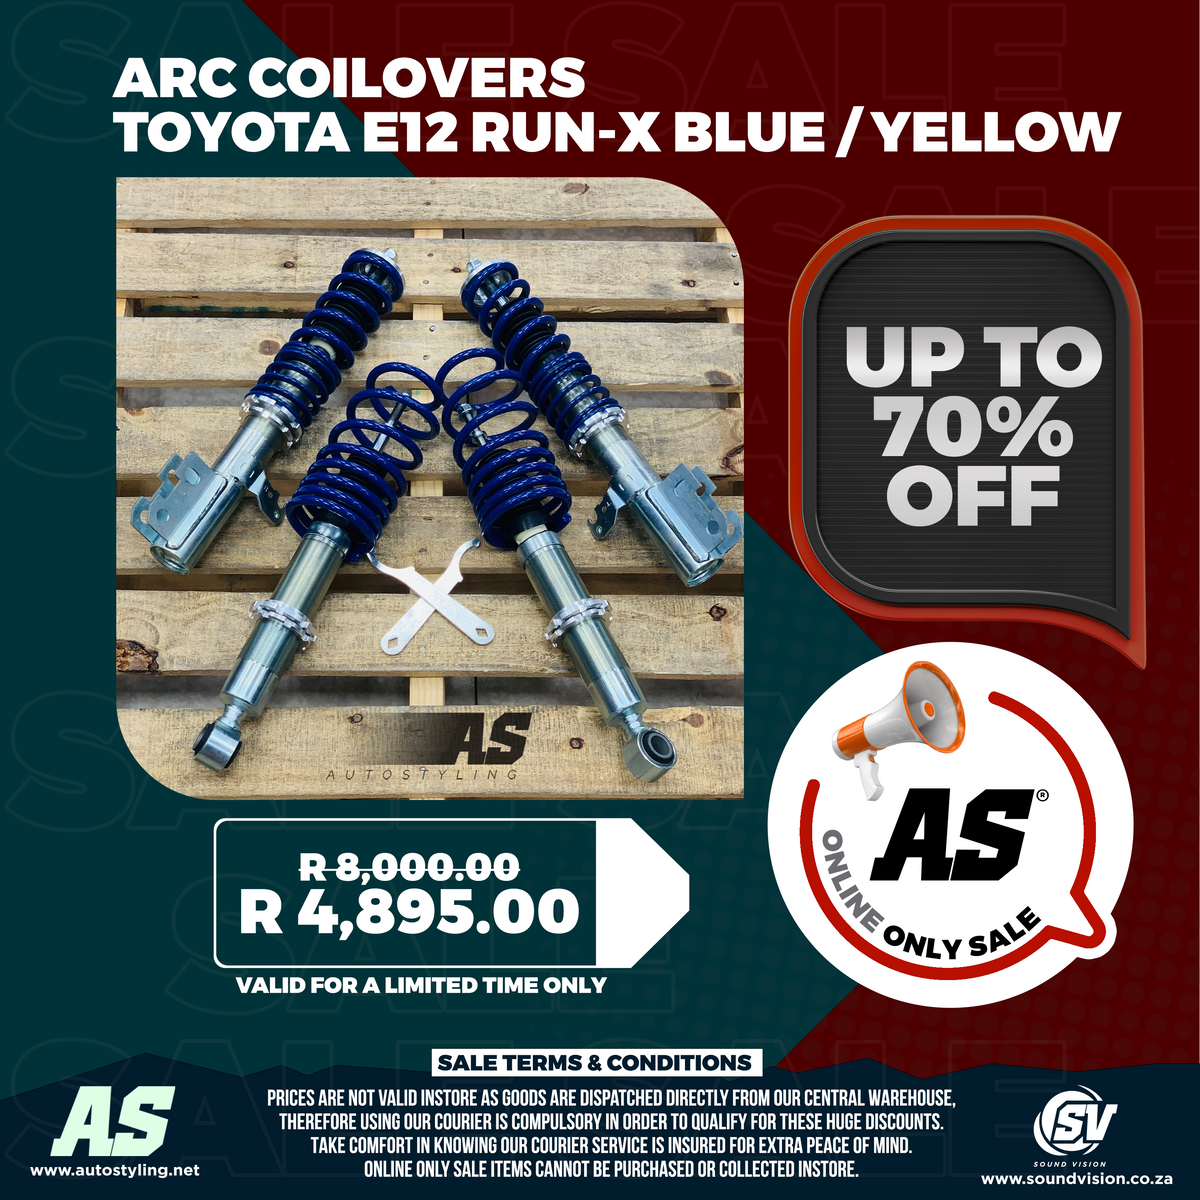 ARC COILOVERS TOYOTA E12 Run-X blue / yellow